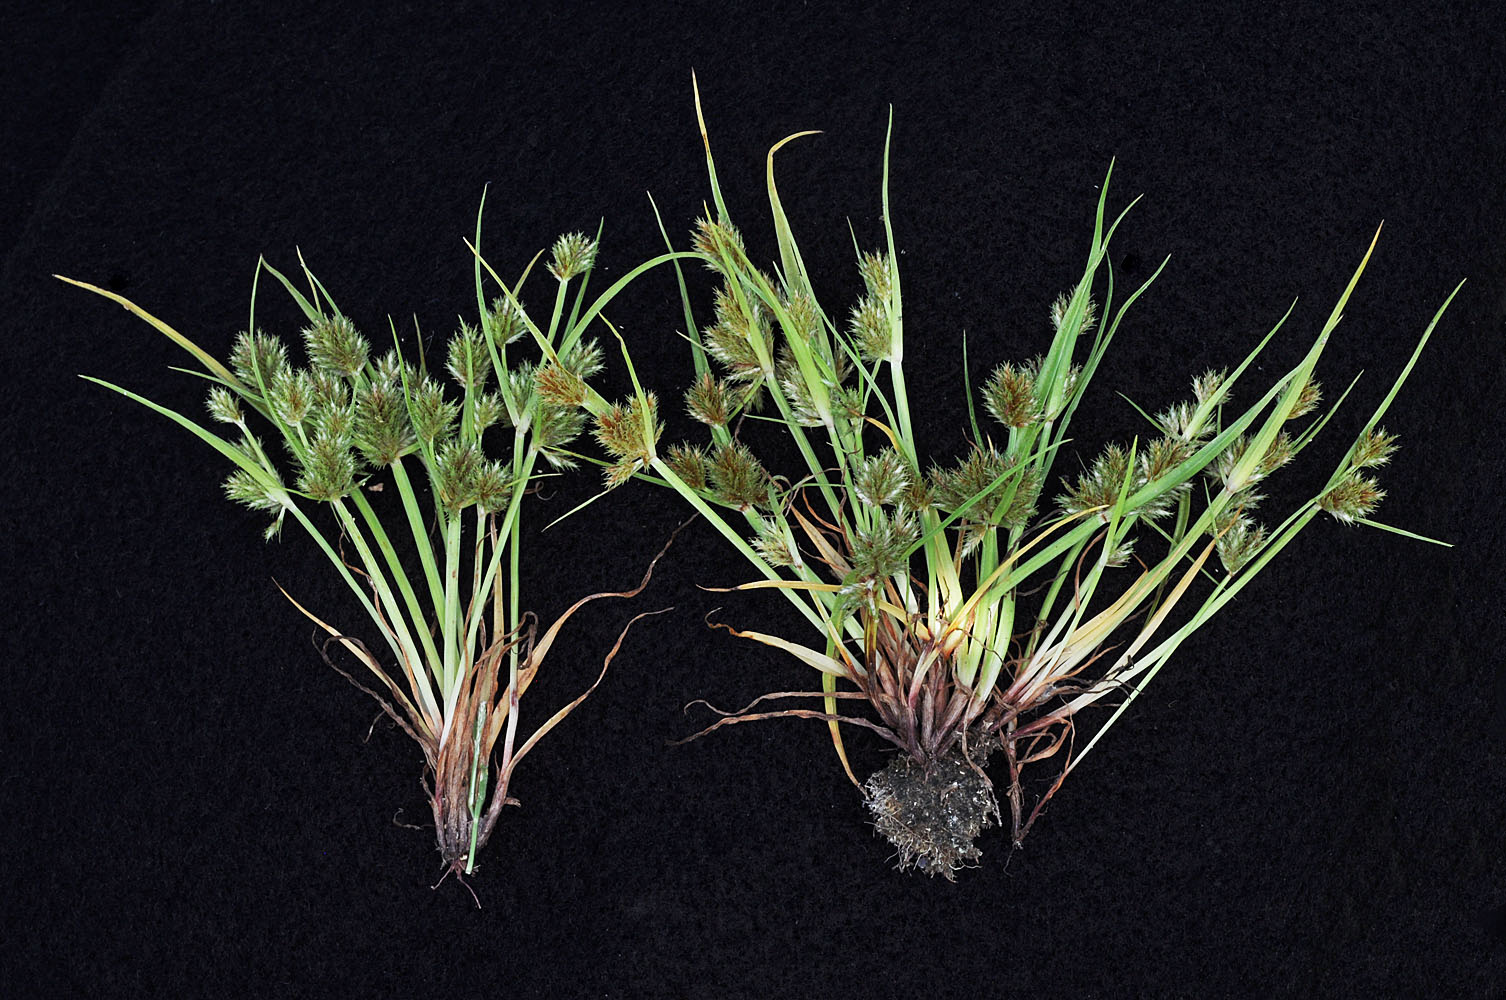 Flora of Eastern Washington Image: Cyperus squarrosus